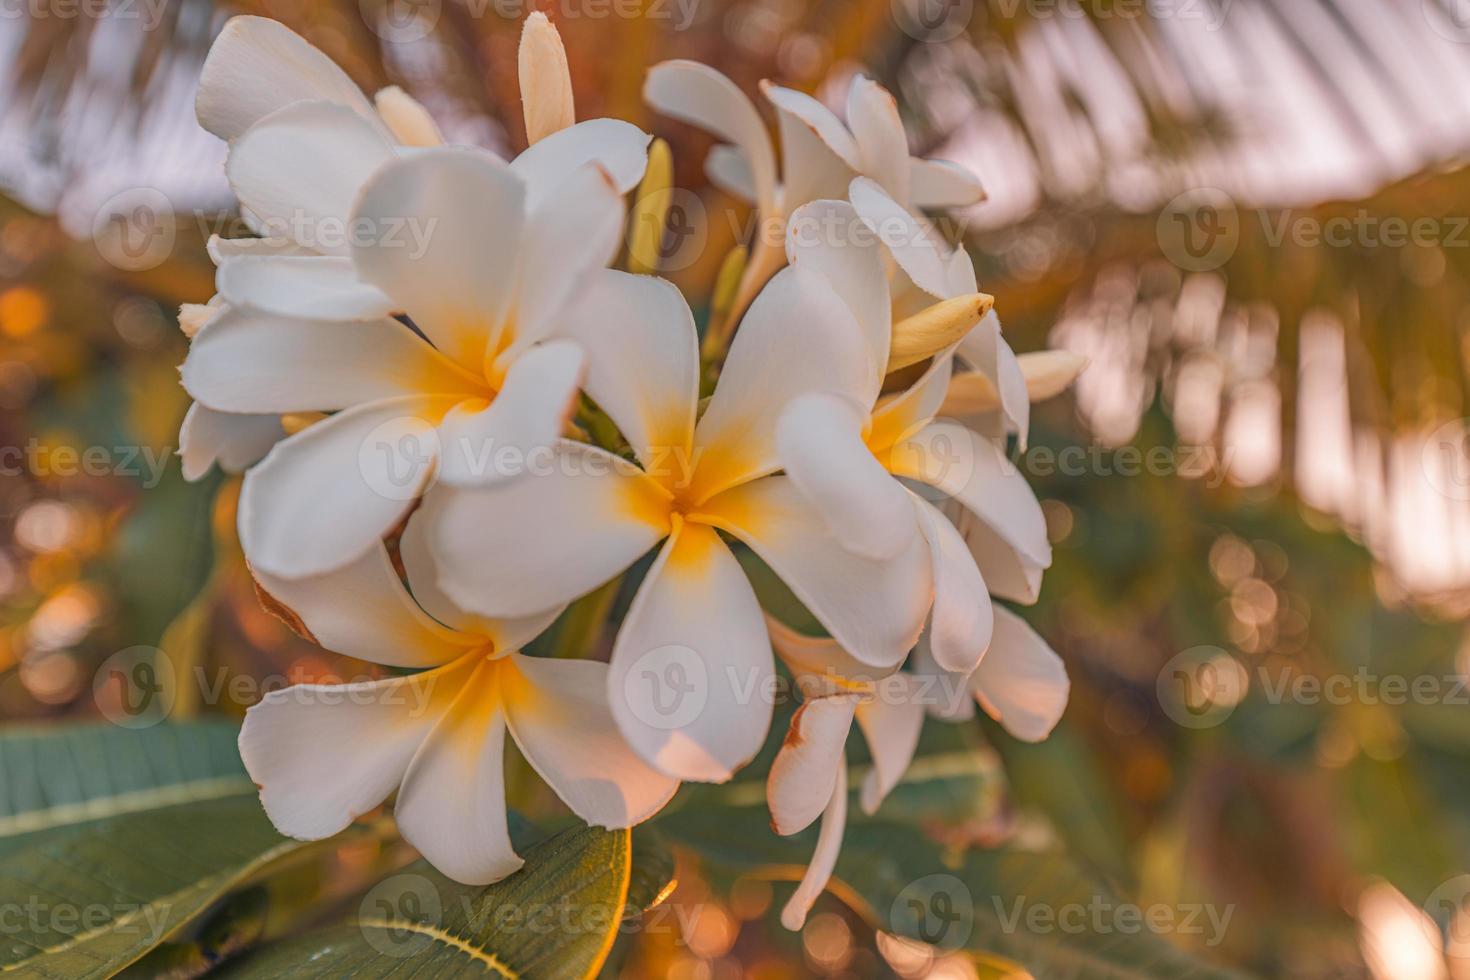 primer plano de la hermosa plumeria frangipani fondo natural floral, macro de naturaleza artística. fondo de verano de primavera, follaje de bokeh borroso, vista de la naturaleza colorida. flores florecientes exóticas, trópico foto